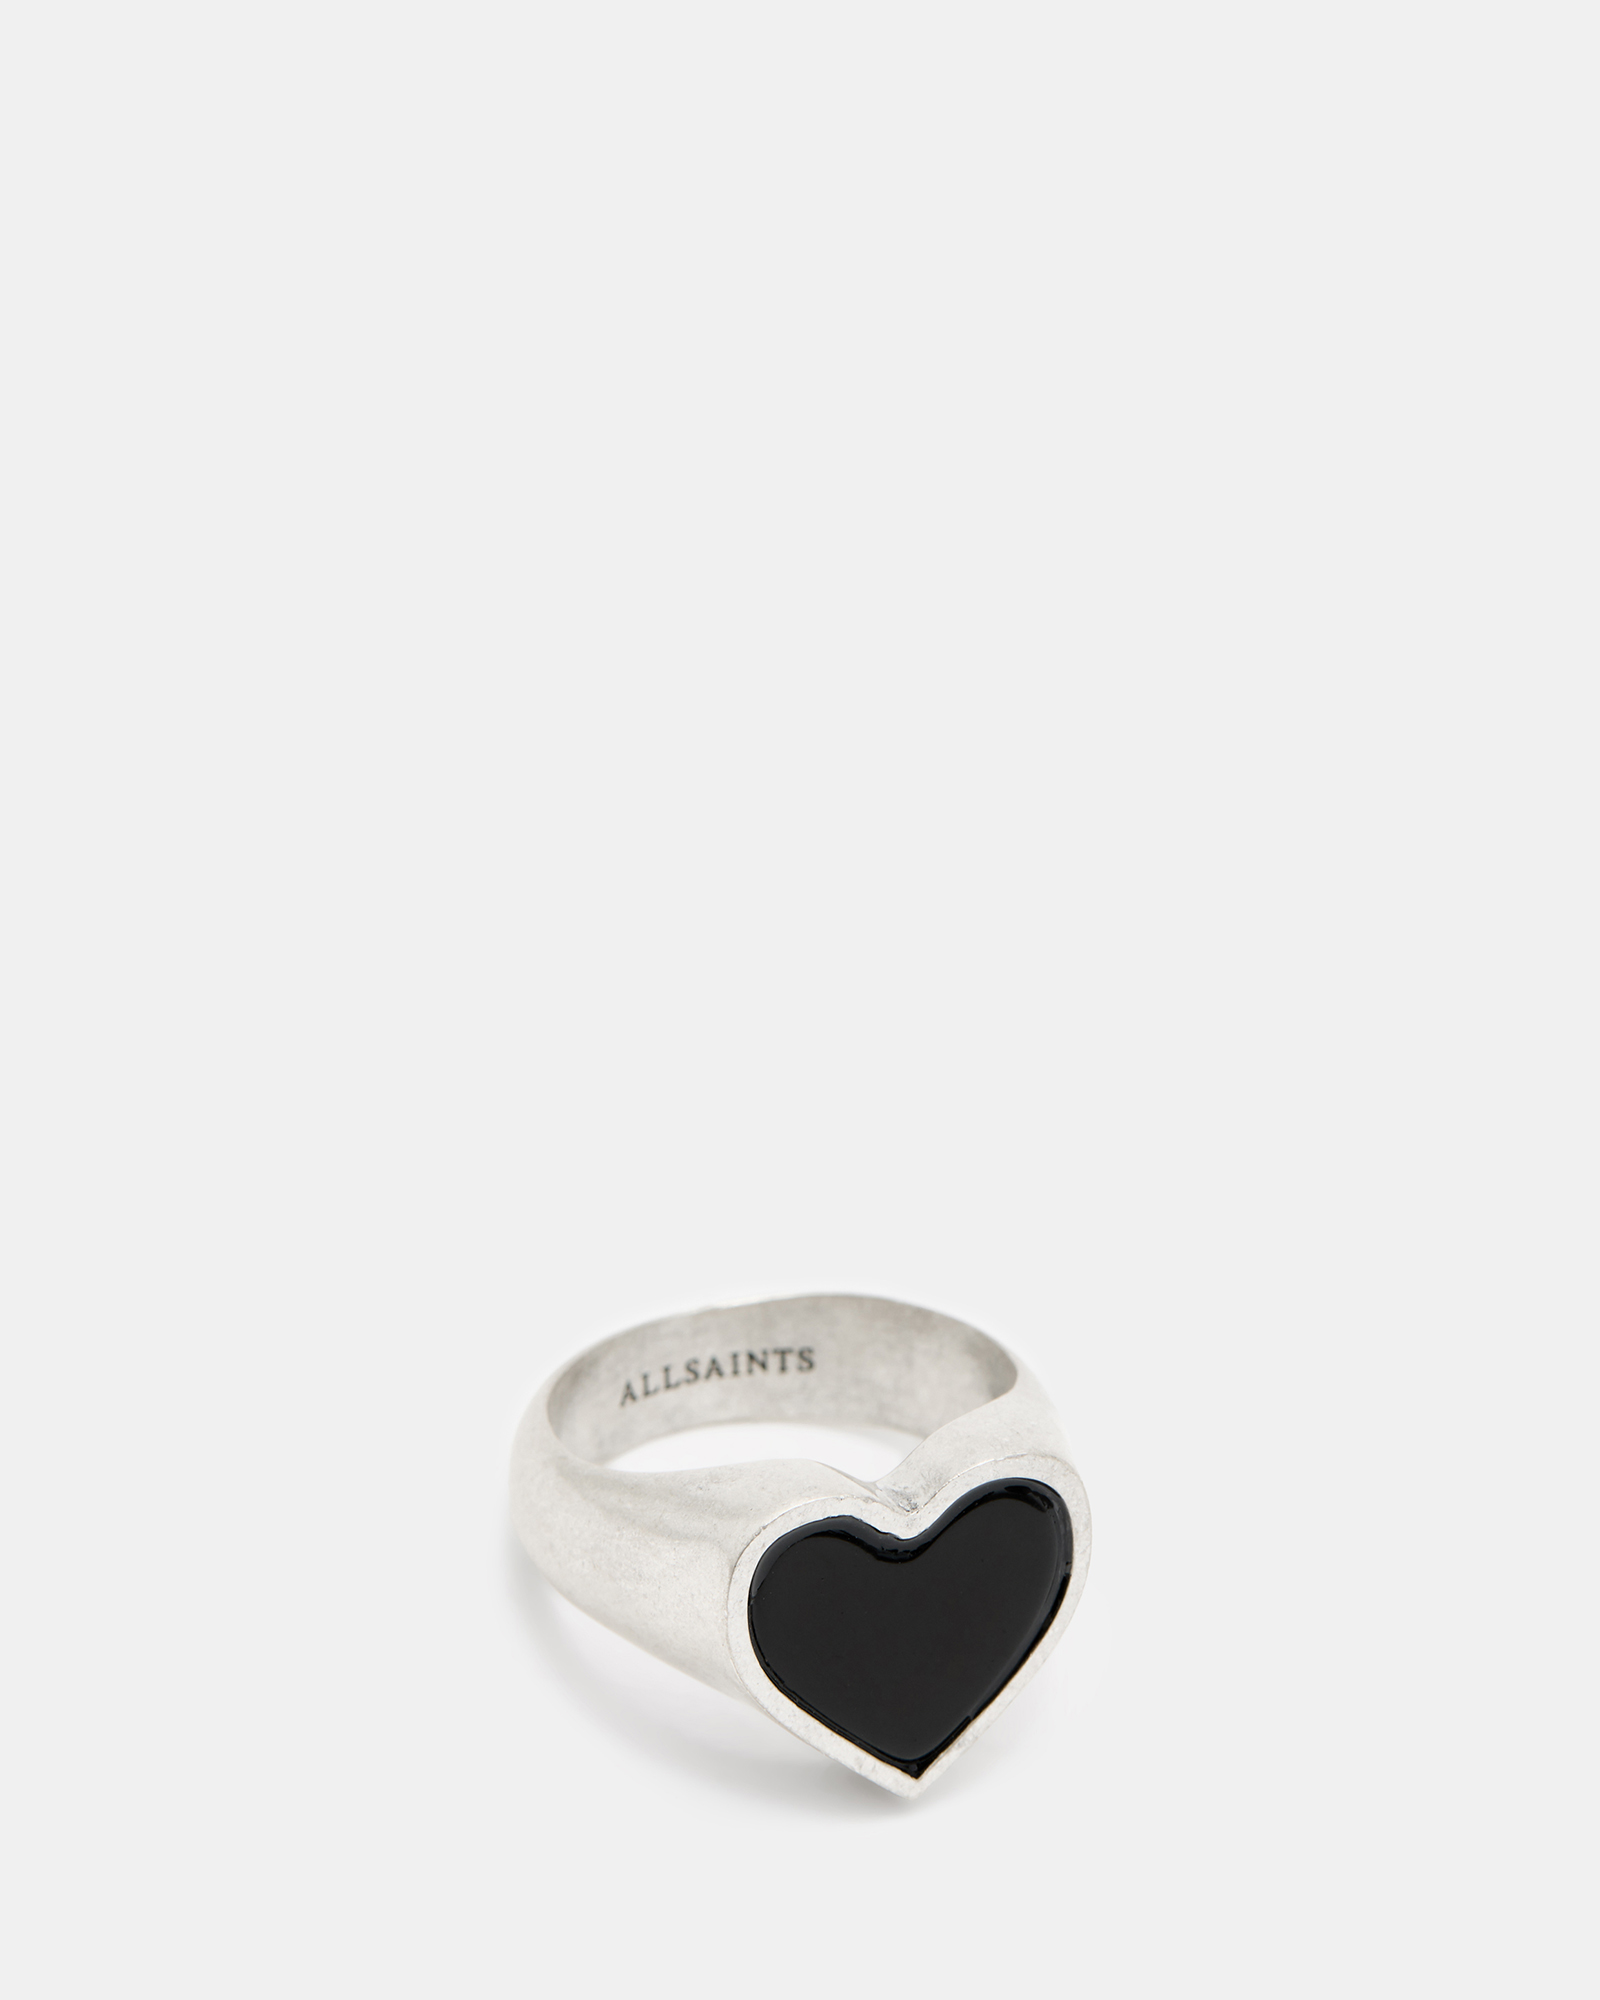 AllSaints Obi Heart Onyx Stone Signet Ring,, WARM SLVR/BLK ONYX